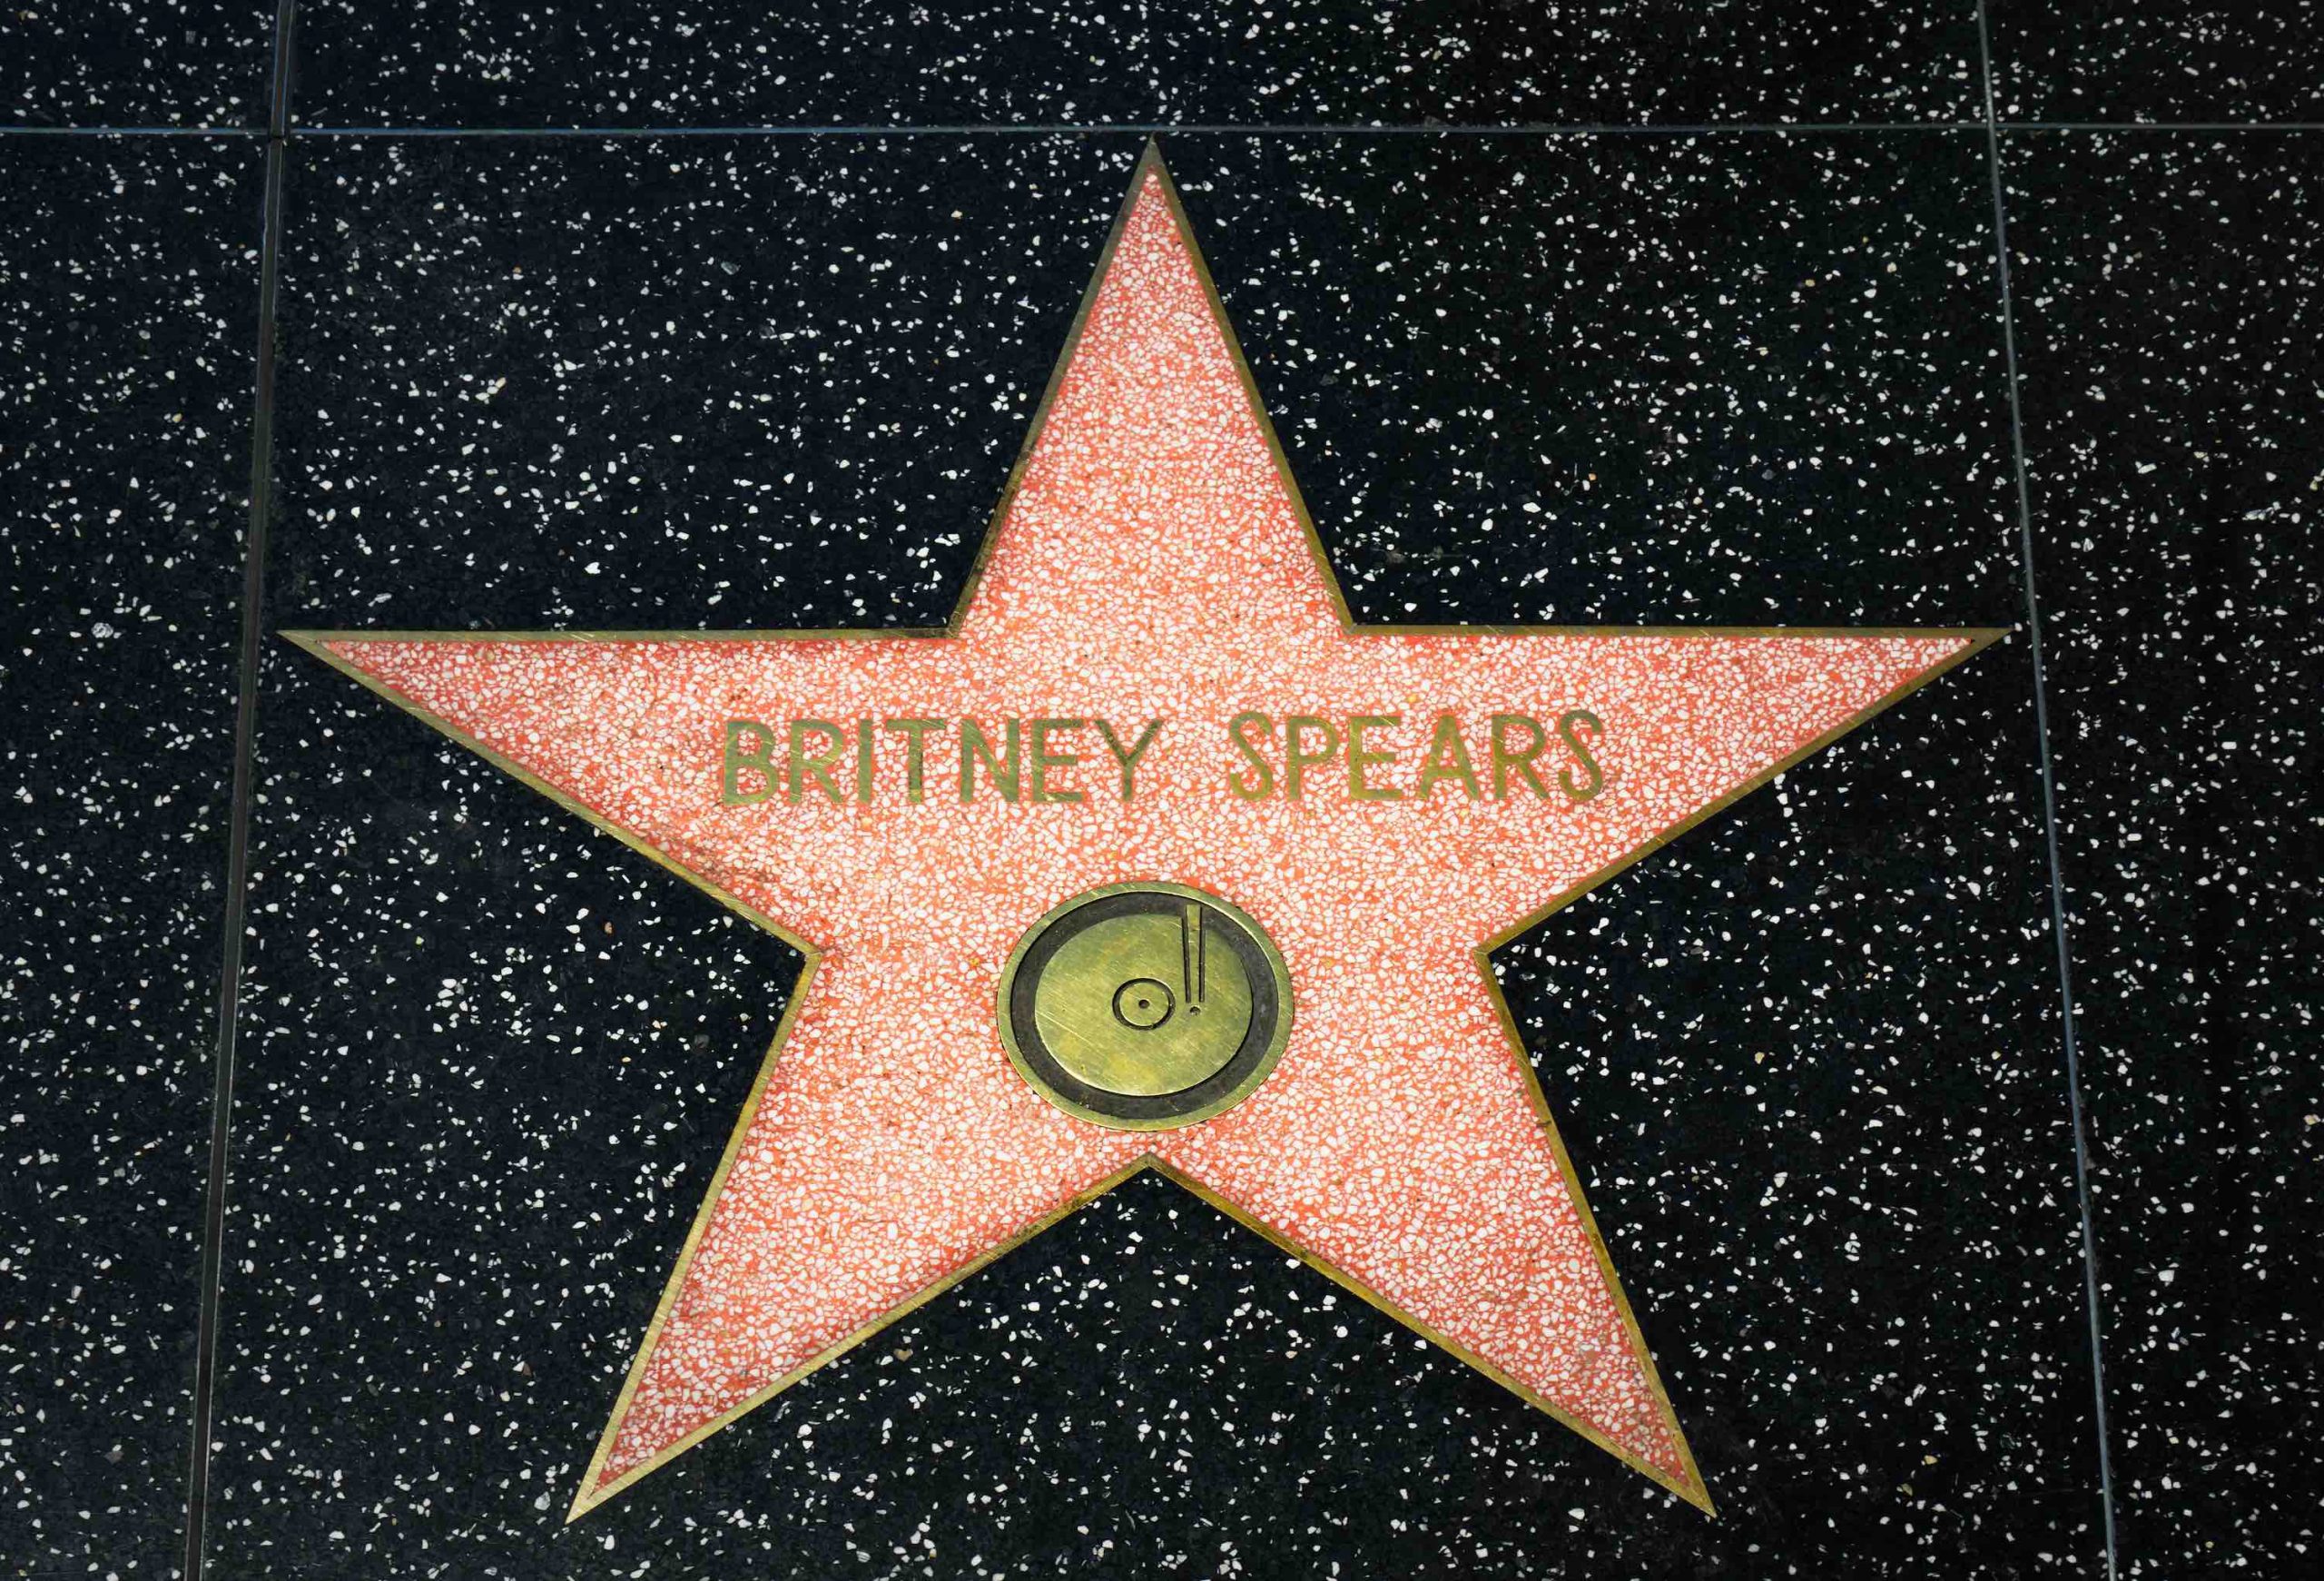 Britney Spears guardianship